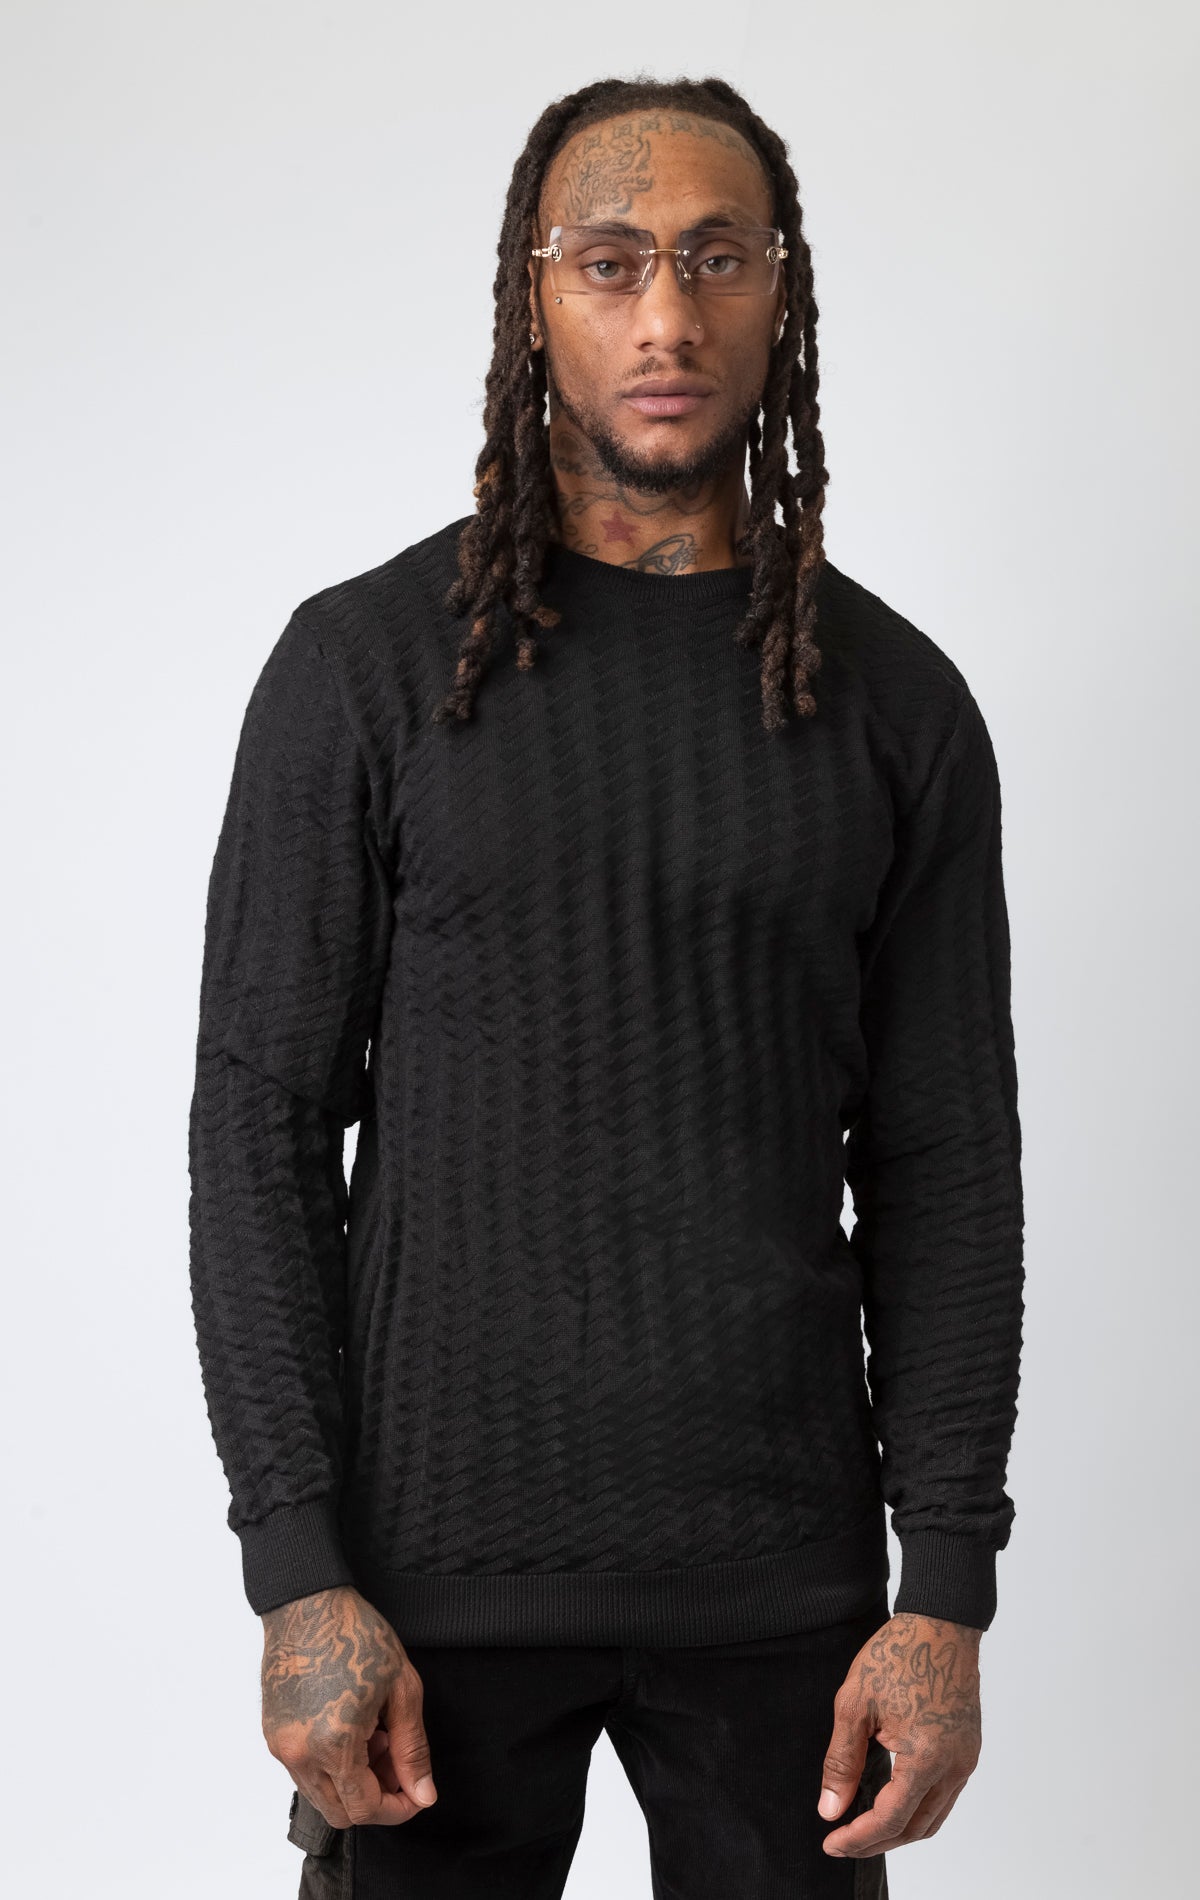  textured black crew neck sweater.